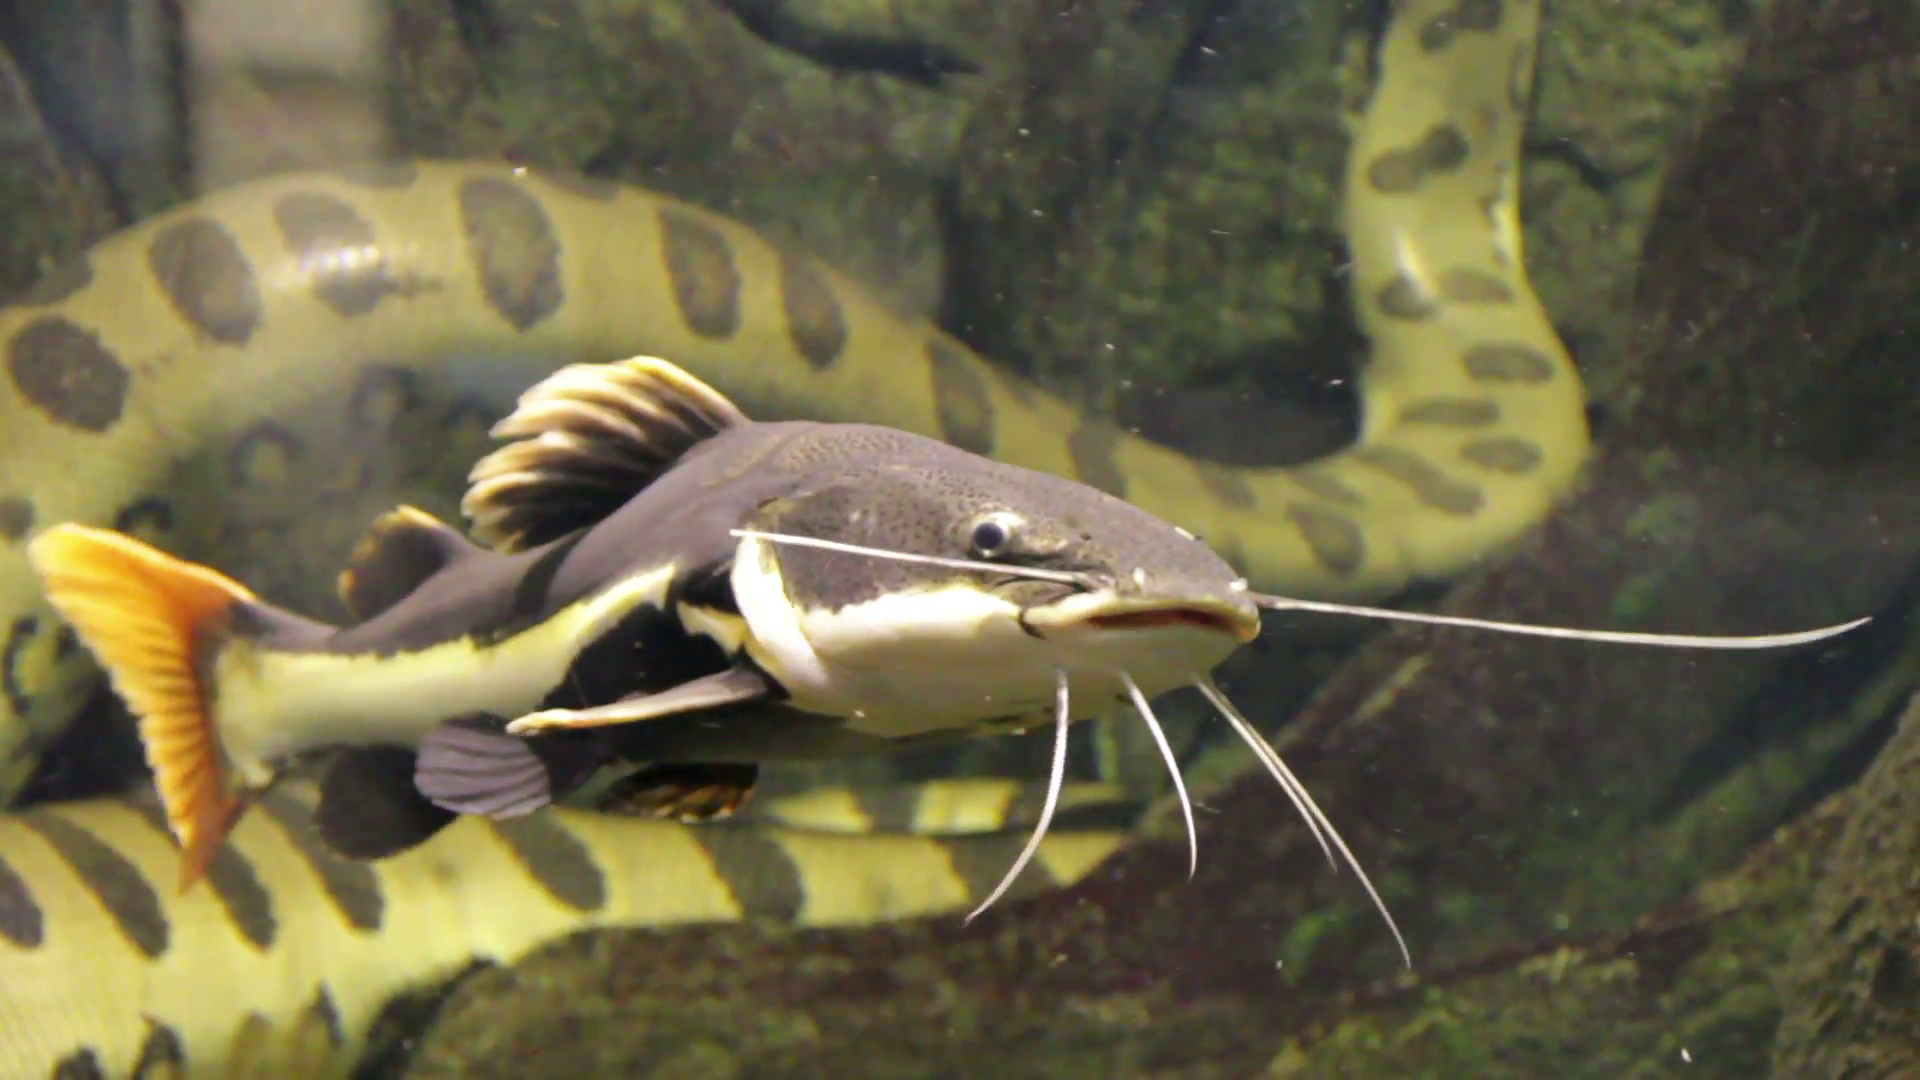 Redtail Catfish. 